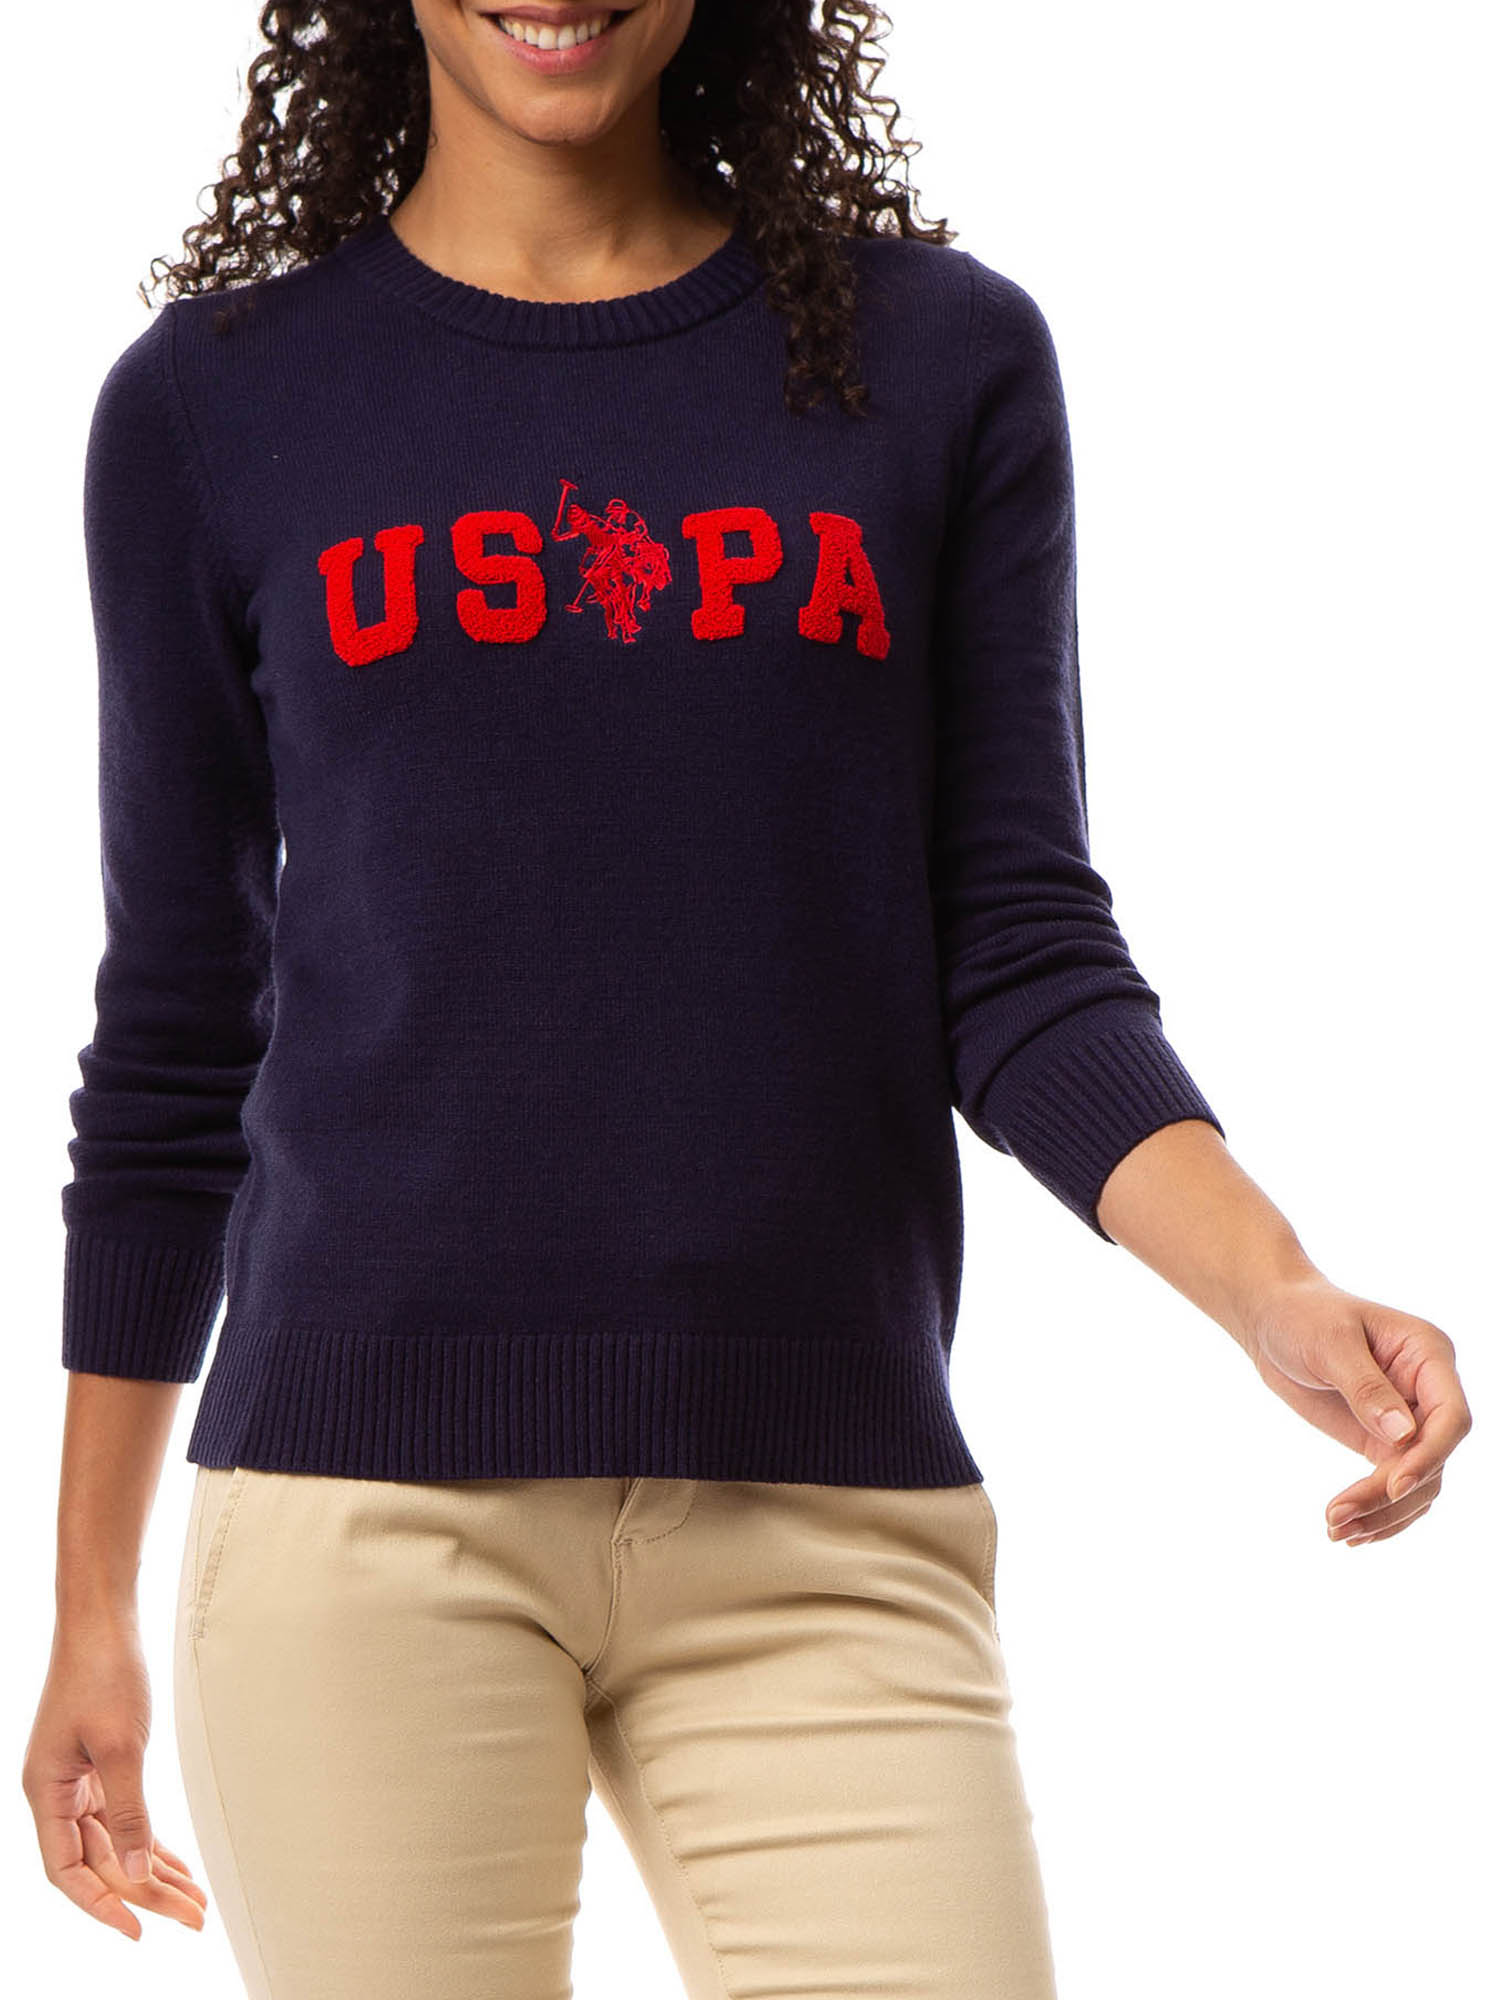 U.S. Polo Assn. Women’s Logo Crewneck Sweater - image 1 of 4